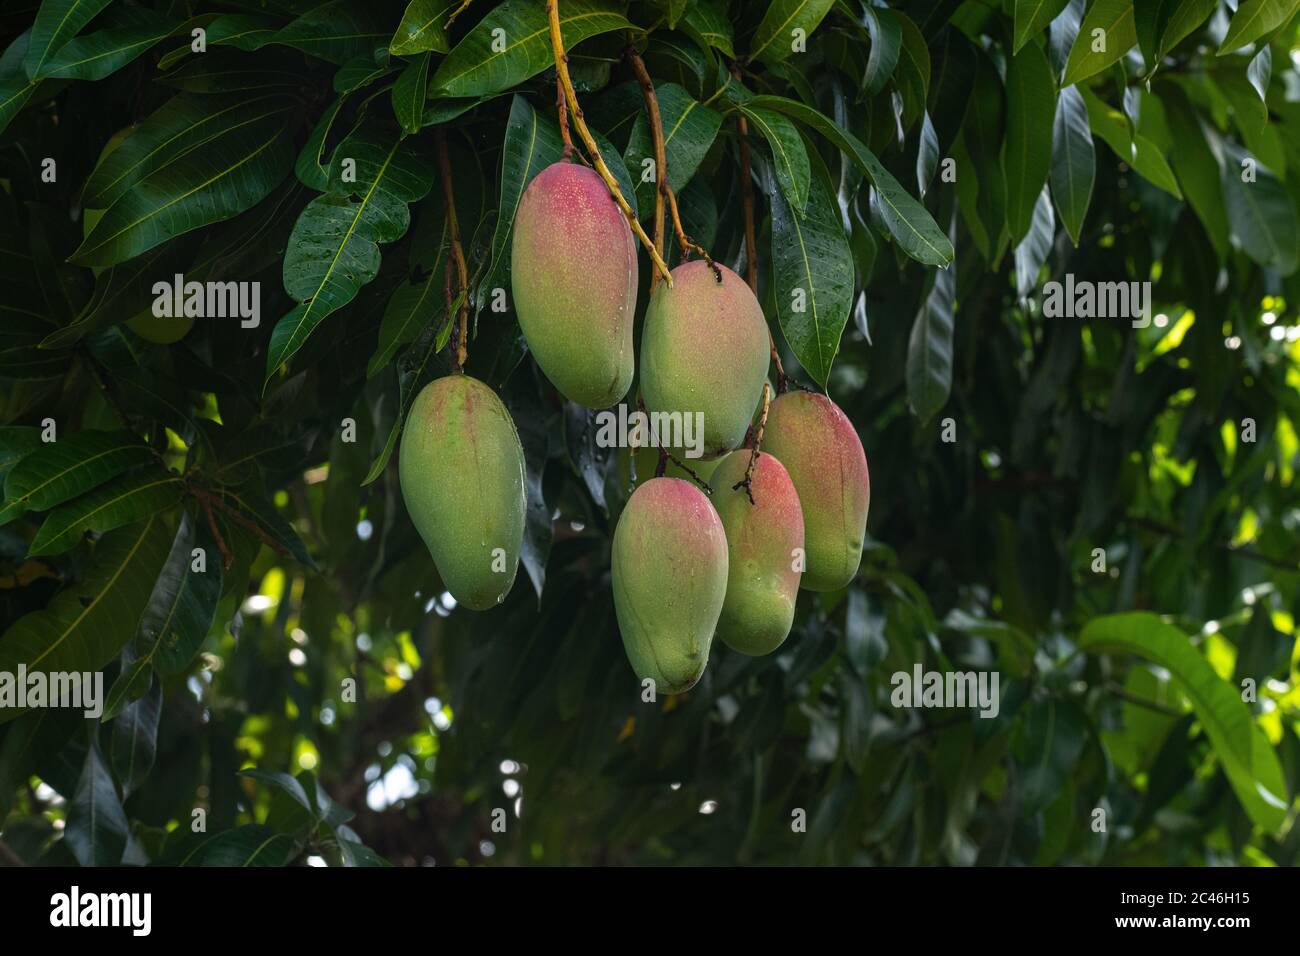 https://c8.alamy.com/comp/2C46H15/mangos-hanging-in-a-mango-tree-2C46H15.jpg